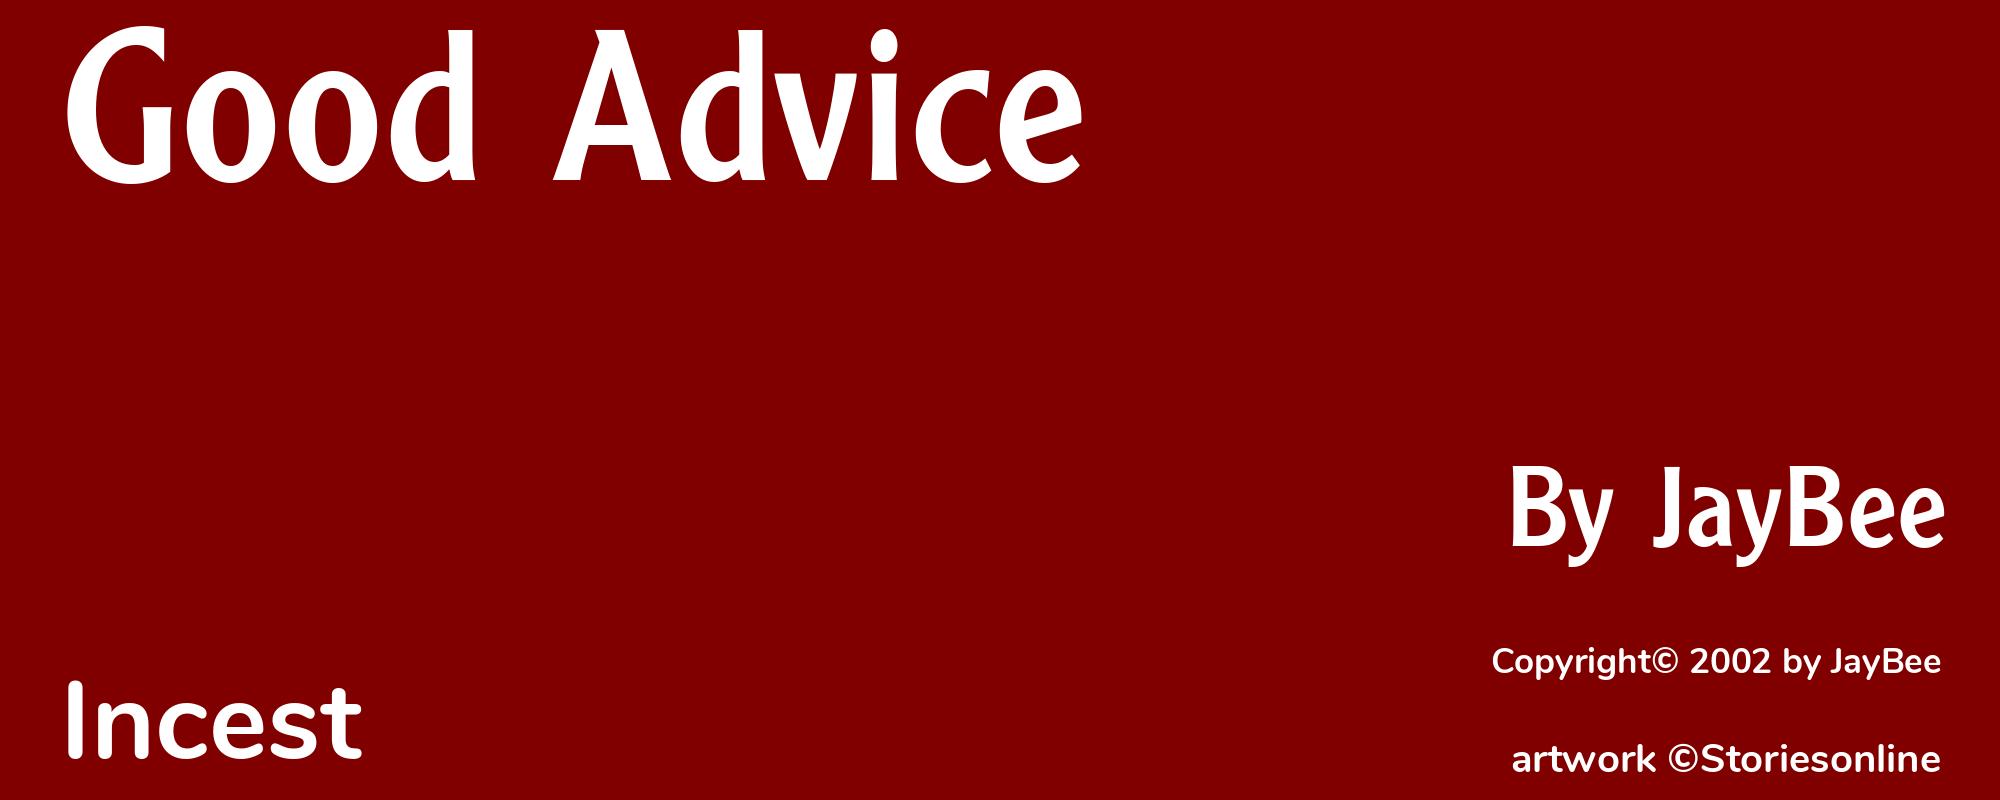 Good Advice - Cover